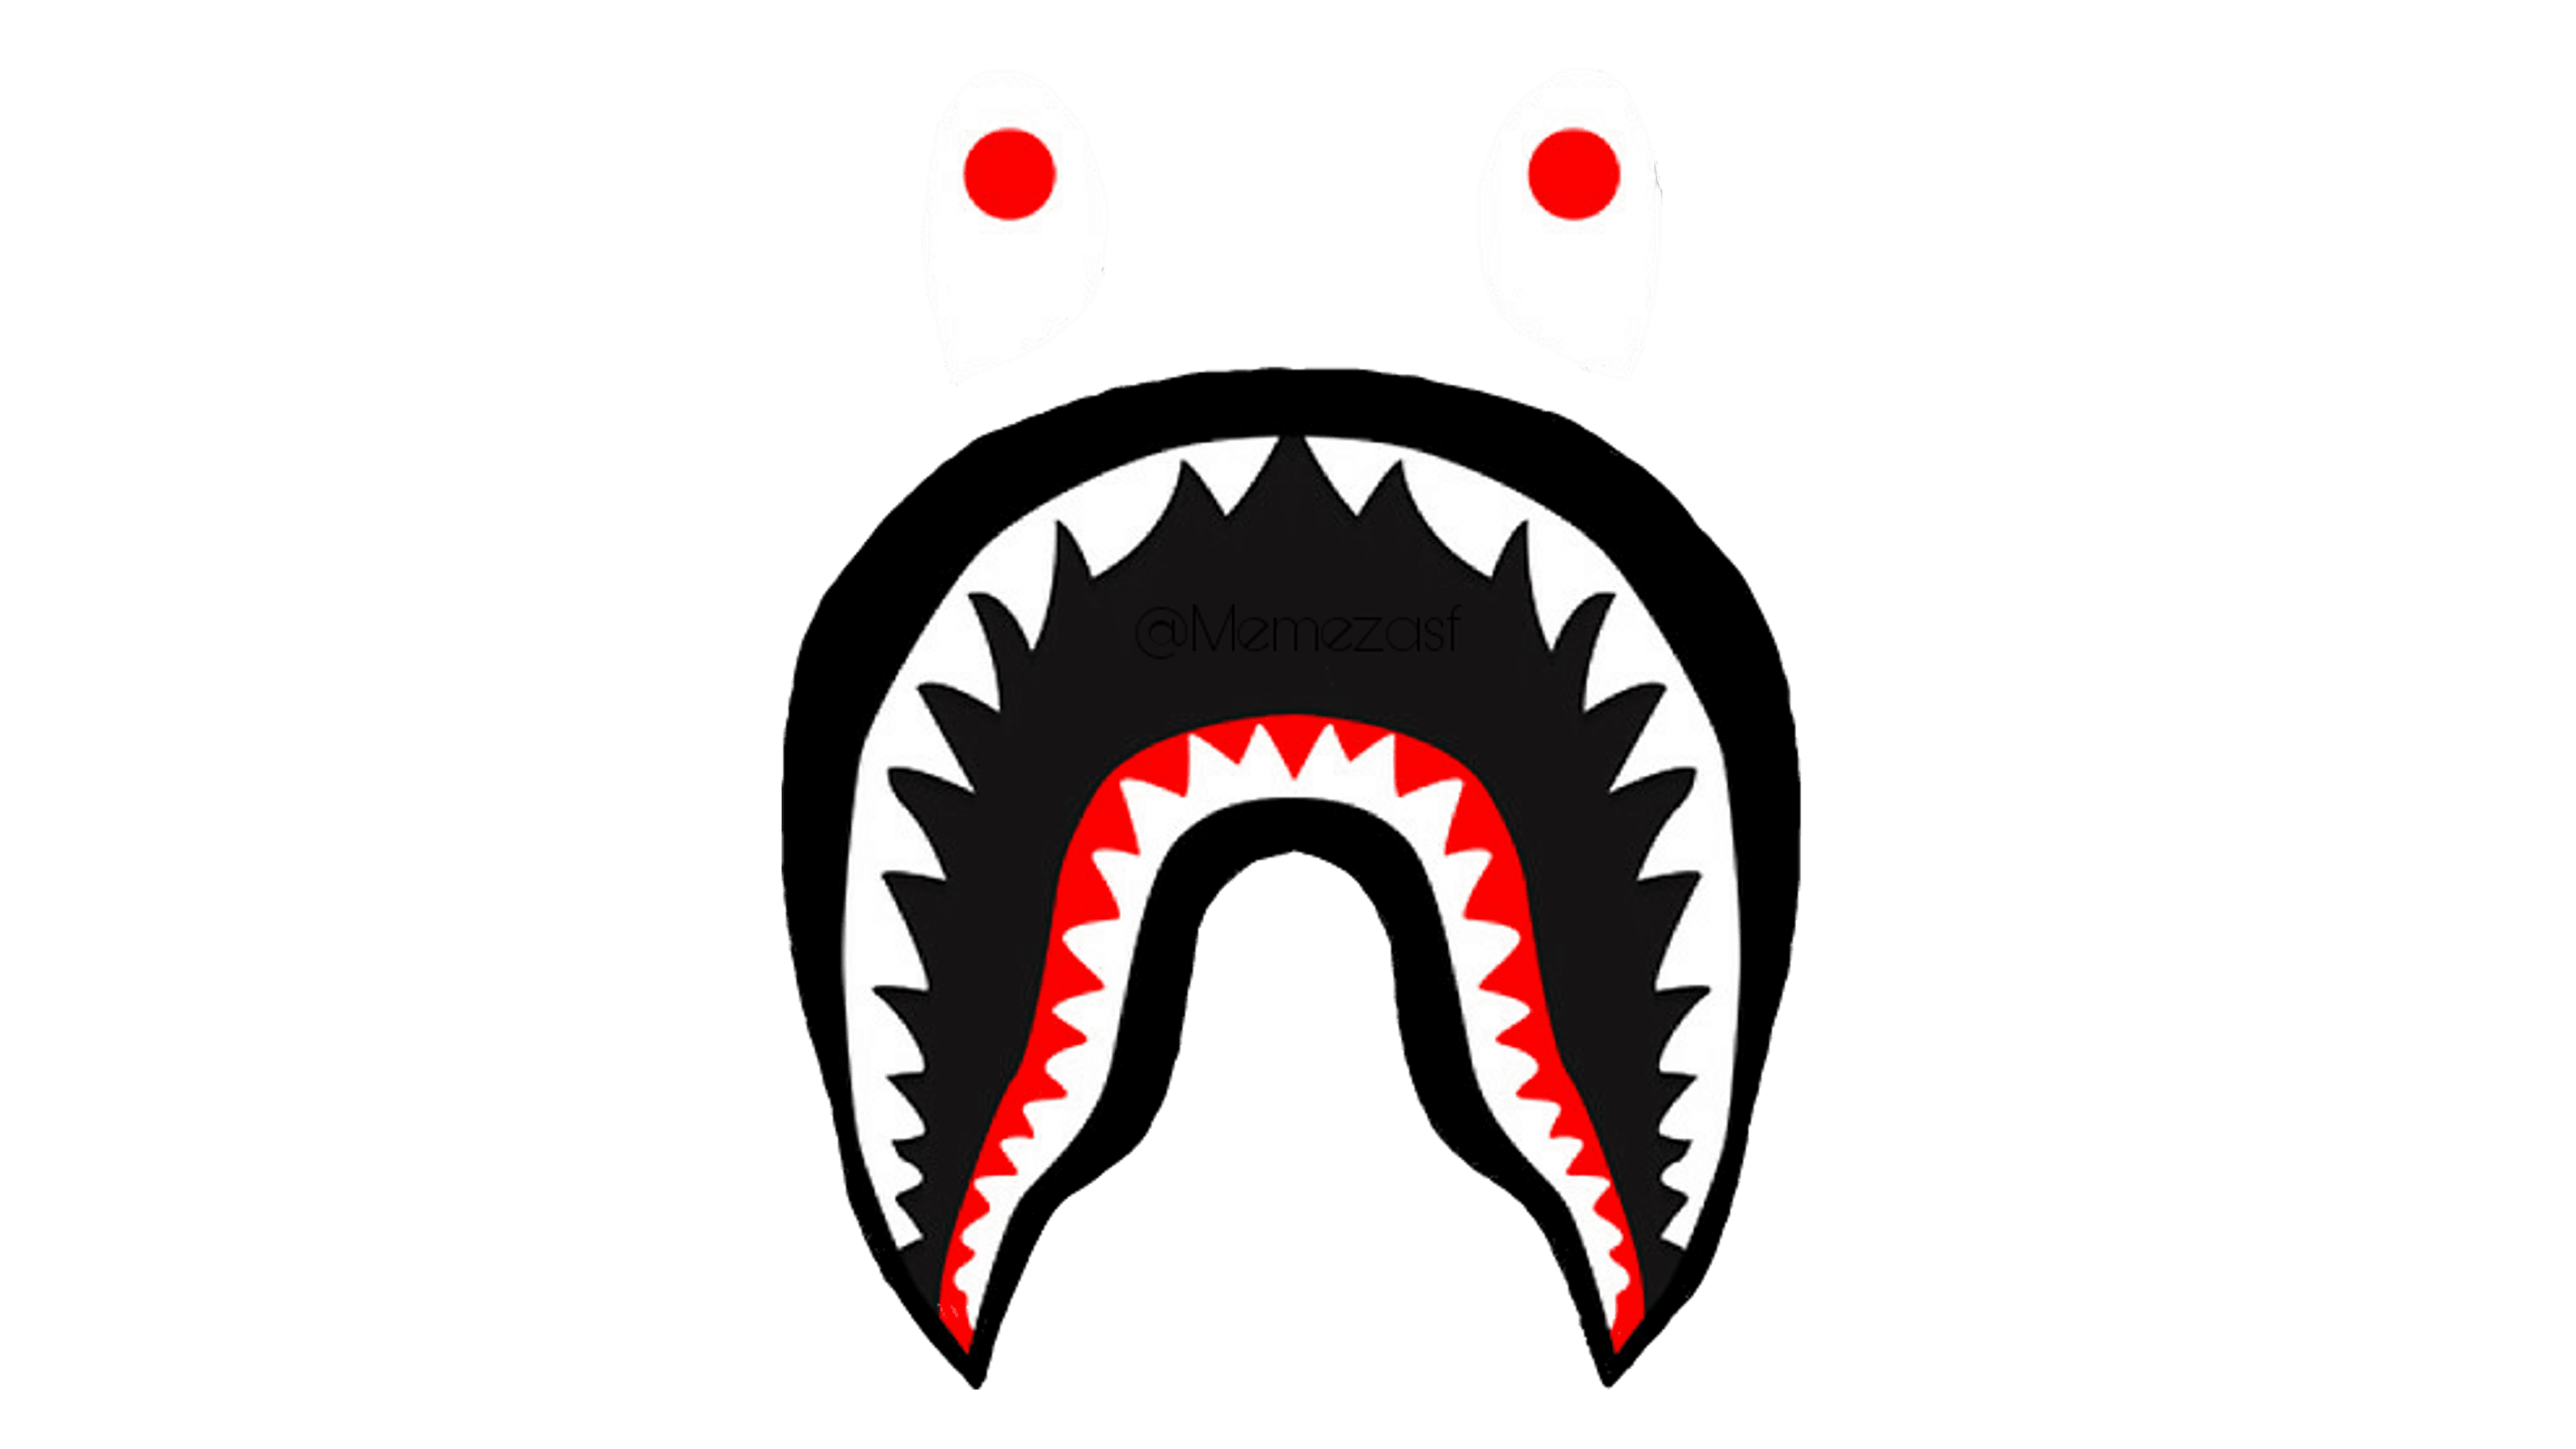 BAPE Shark logo and symbol, meaning, history, PNG